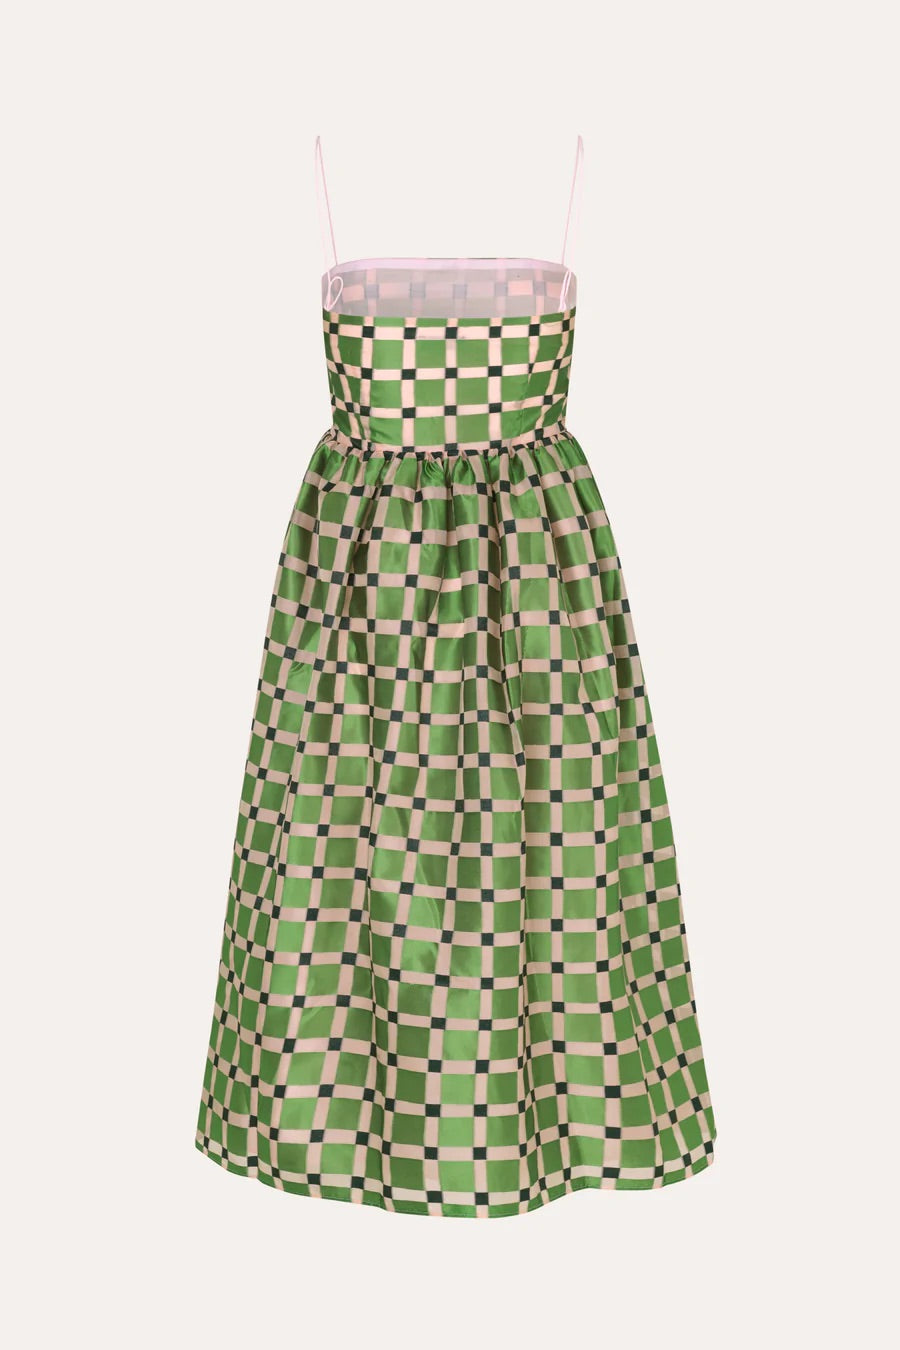 Stine Goya- Anny Dress: Lilac Graphic Check